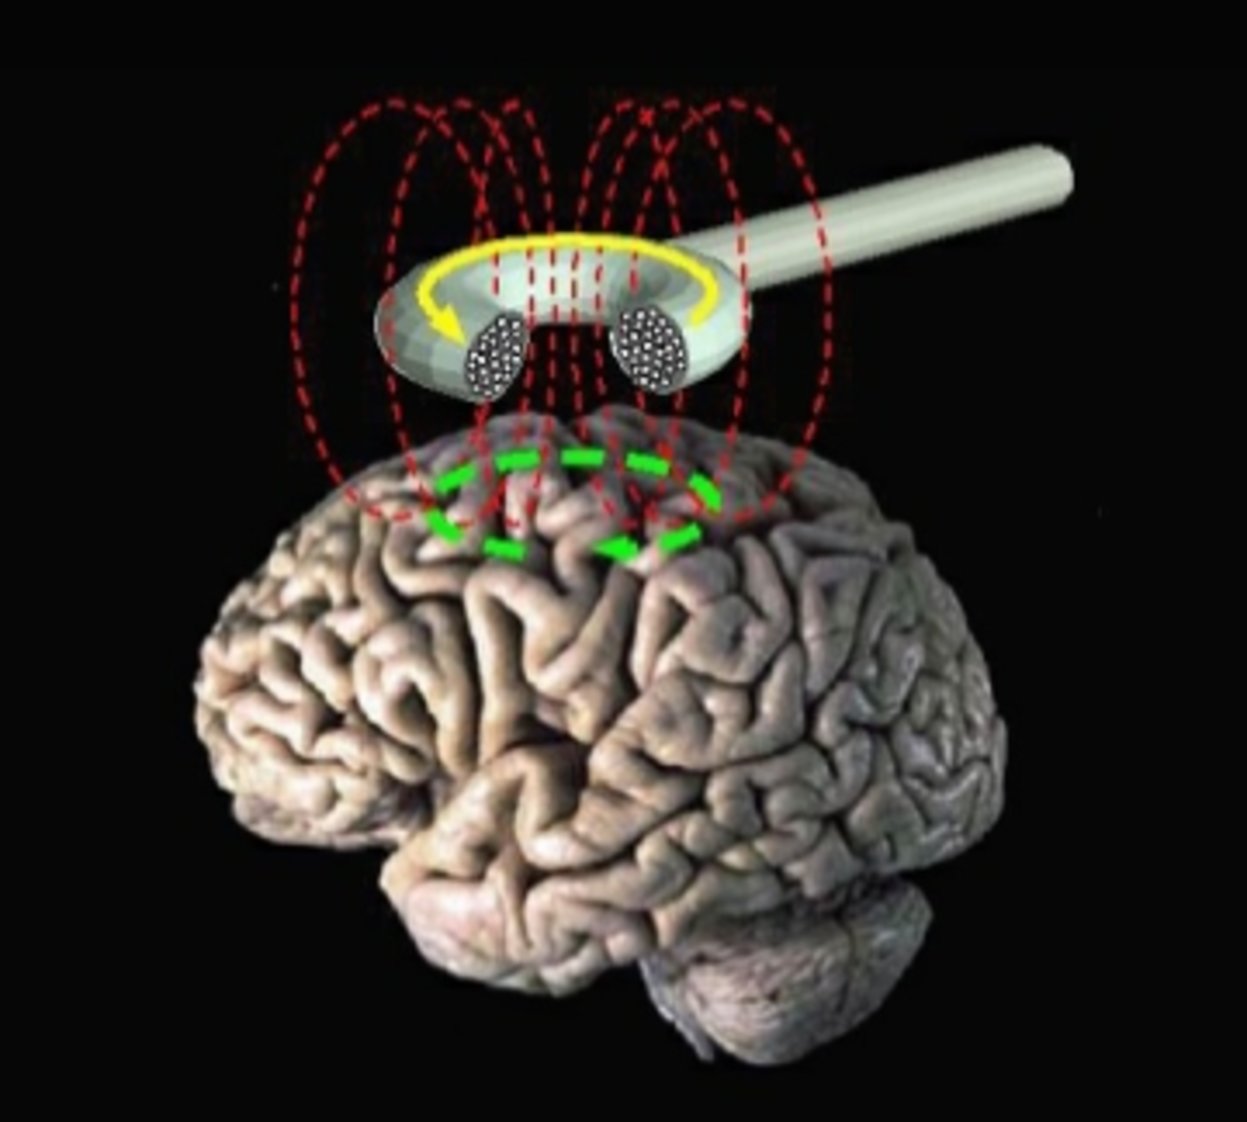 transcranial magneti stimulation